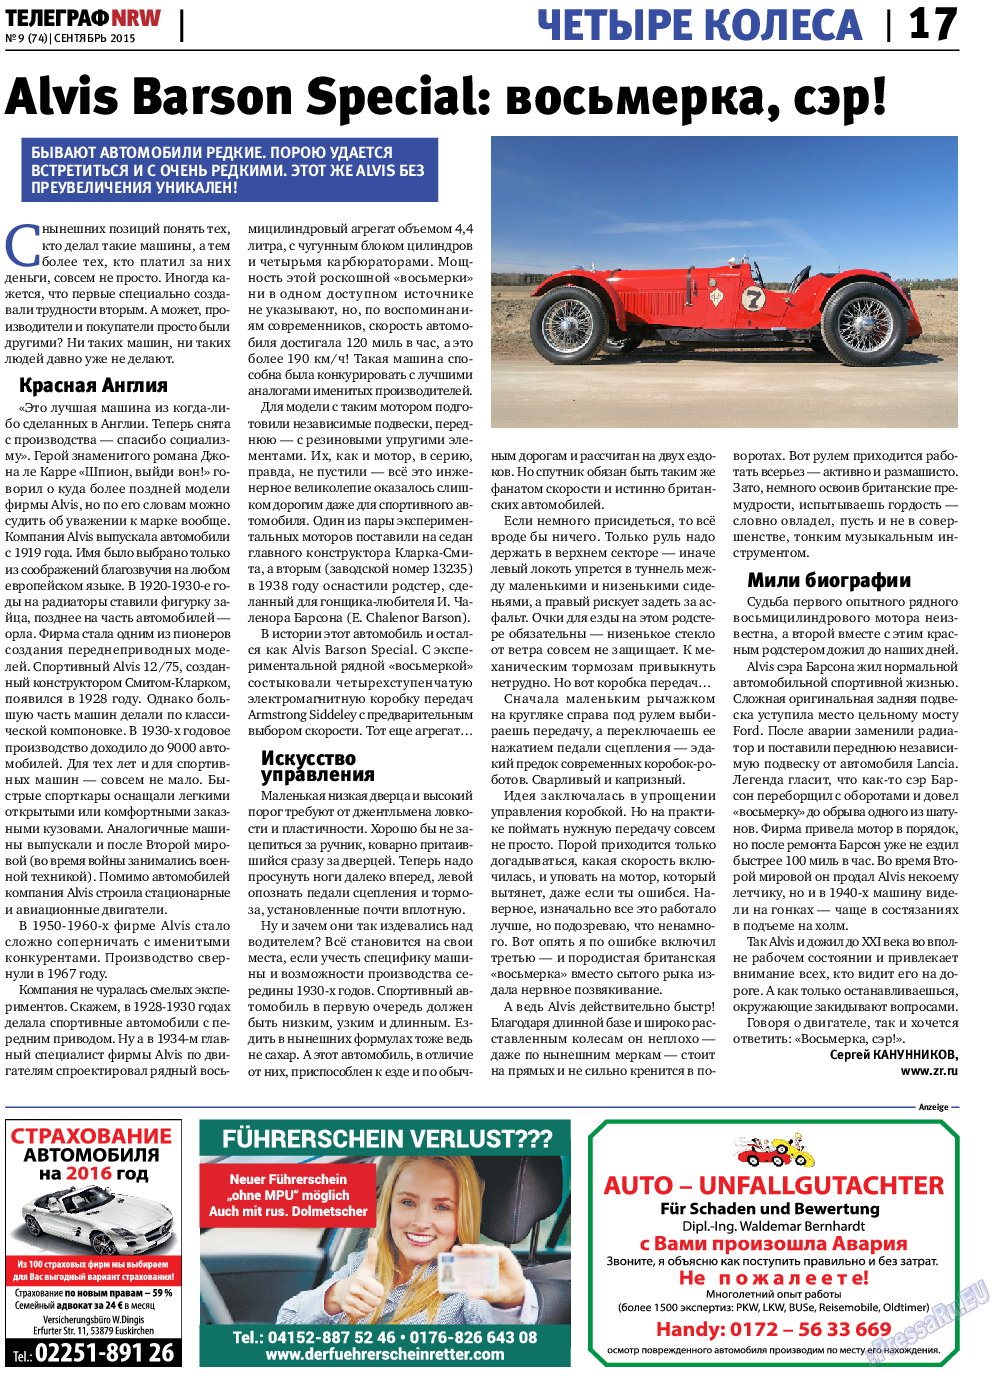 Телеграф NRW, газета. 2015 №9 стр.17